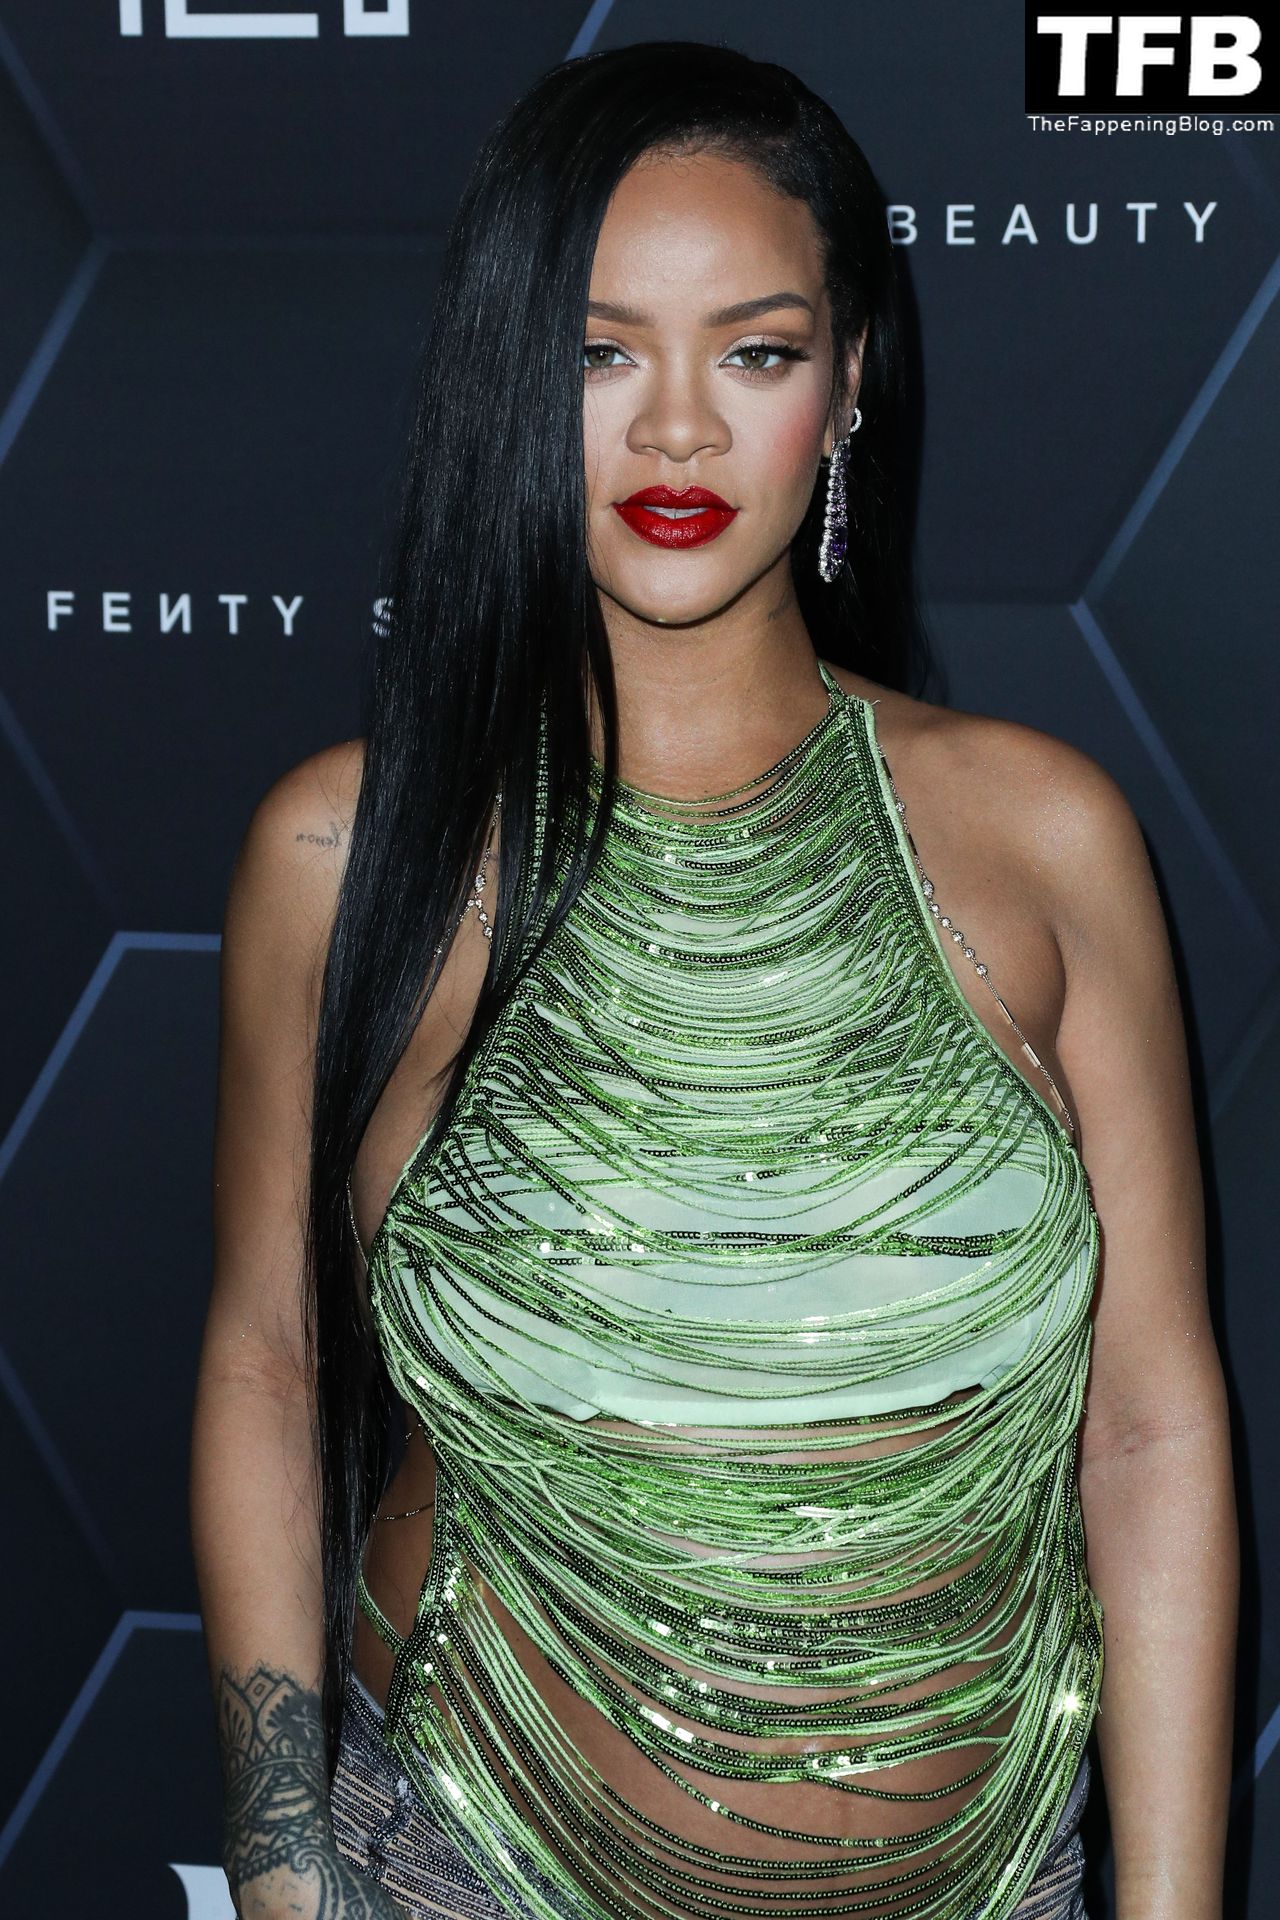 Rihanna-Sexy-The-Fappening-Blog-127.jpg